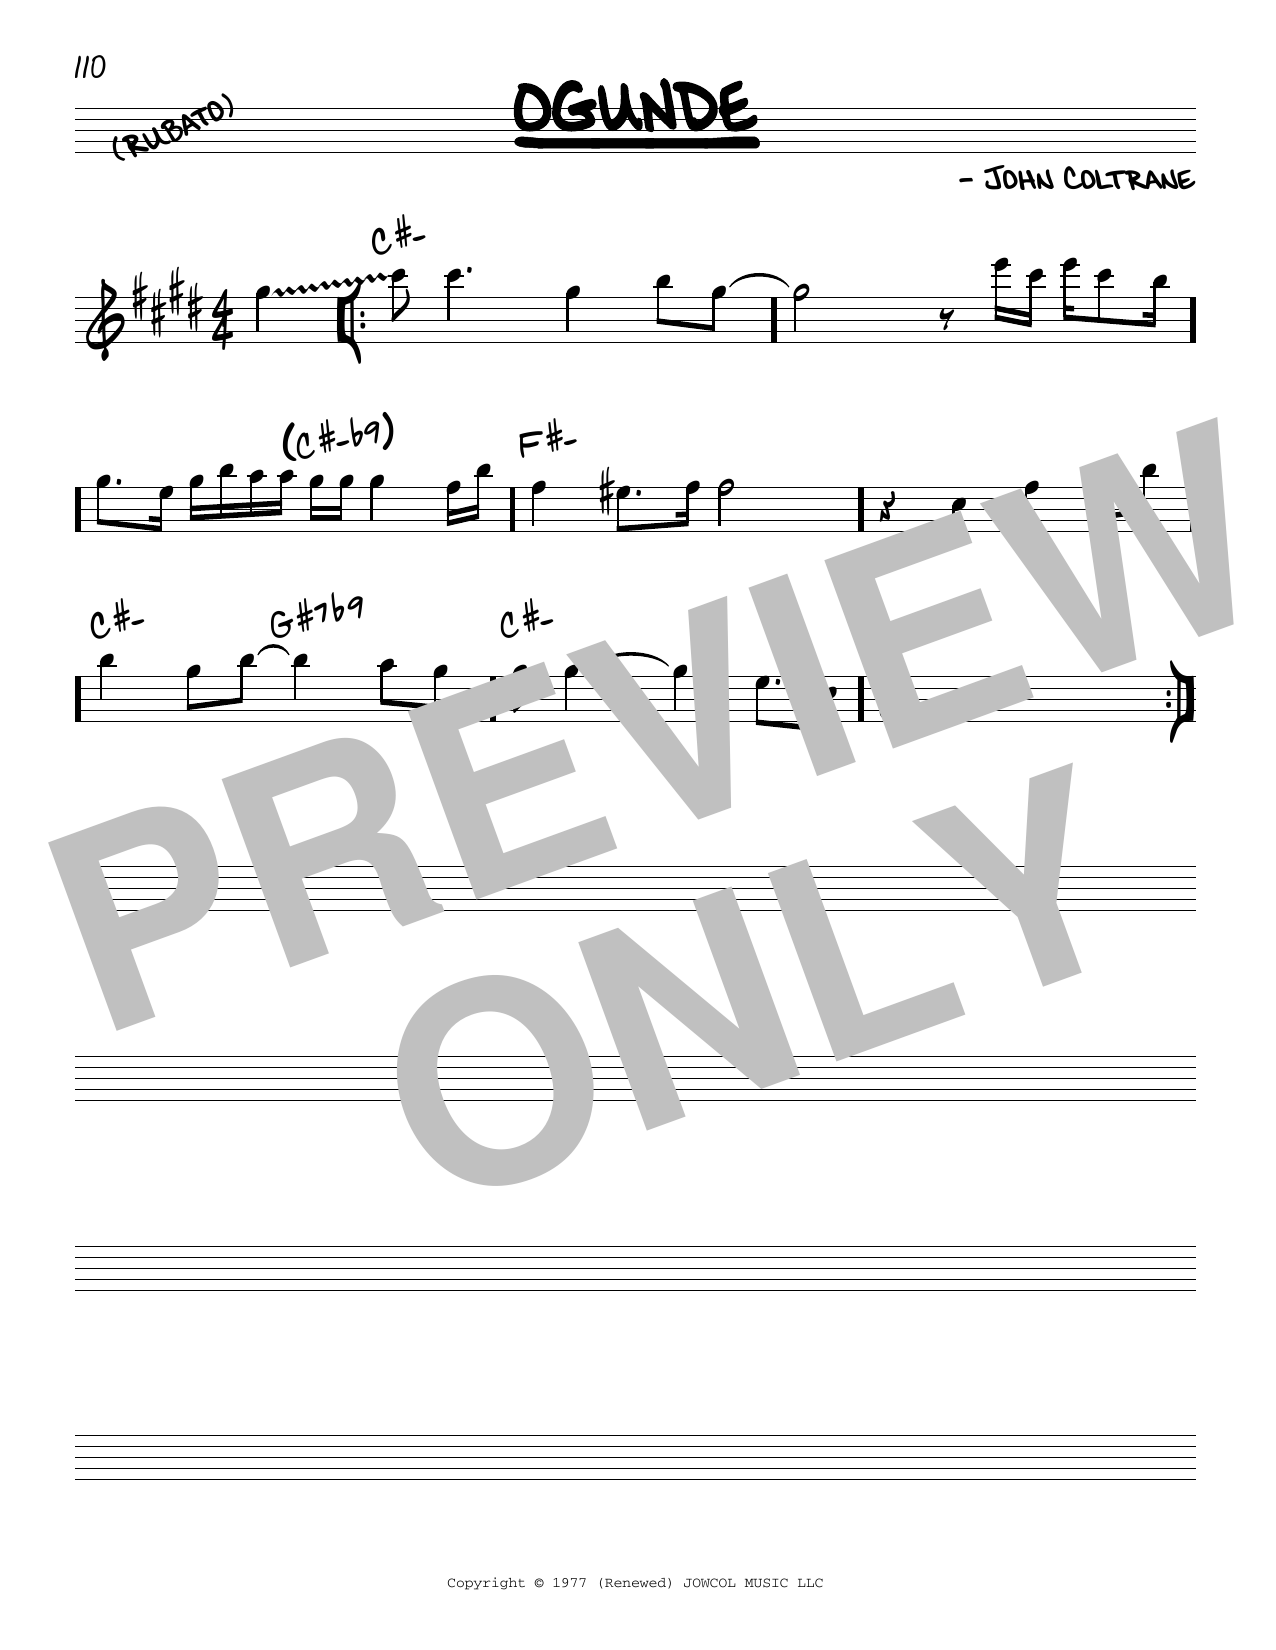 Download John Coltrane Ogunde Sheet Music